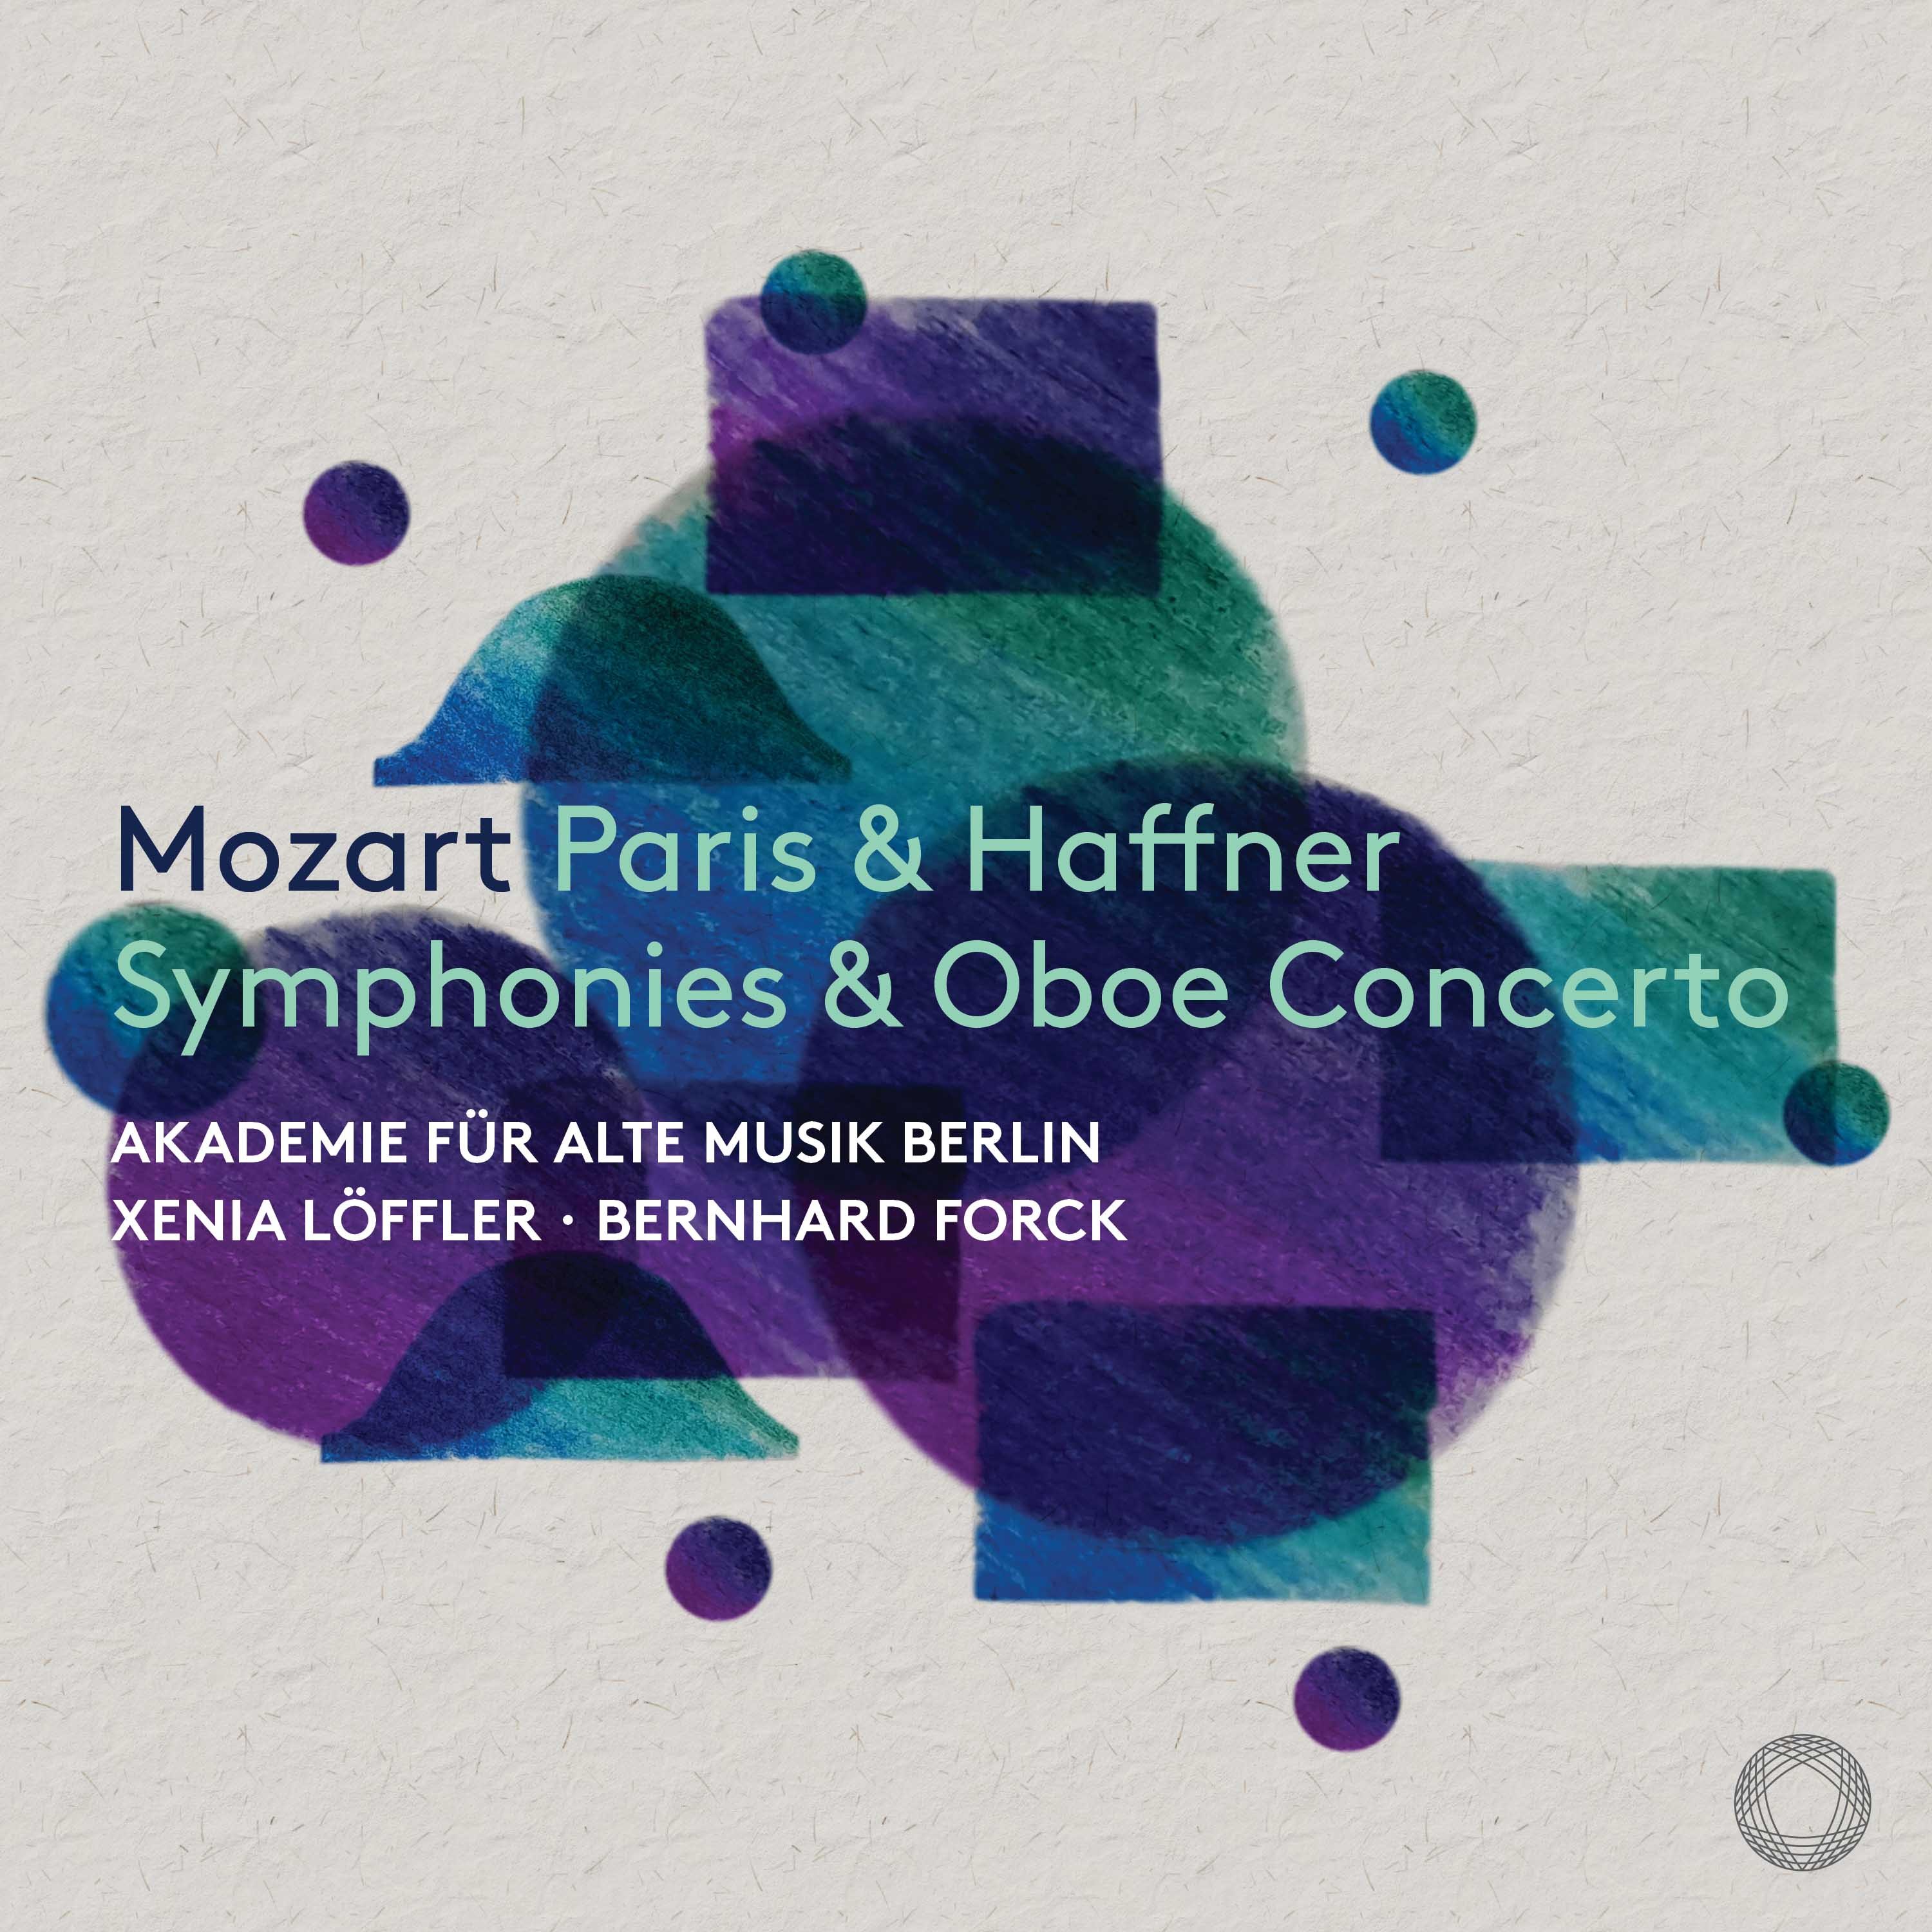 Akademie für Alte Musik Berlin, Xenia Löffler, Bernhard Forck - Mozart: Paris & Haffner Symphonies & Oboe Concerto (2023) [FLAC 24bit/48kHz] Download